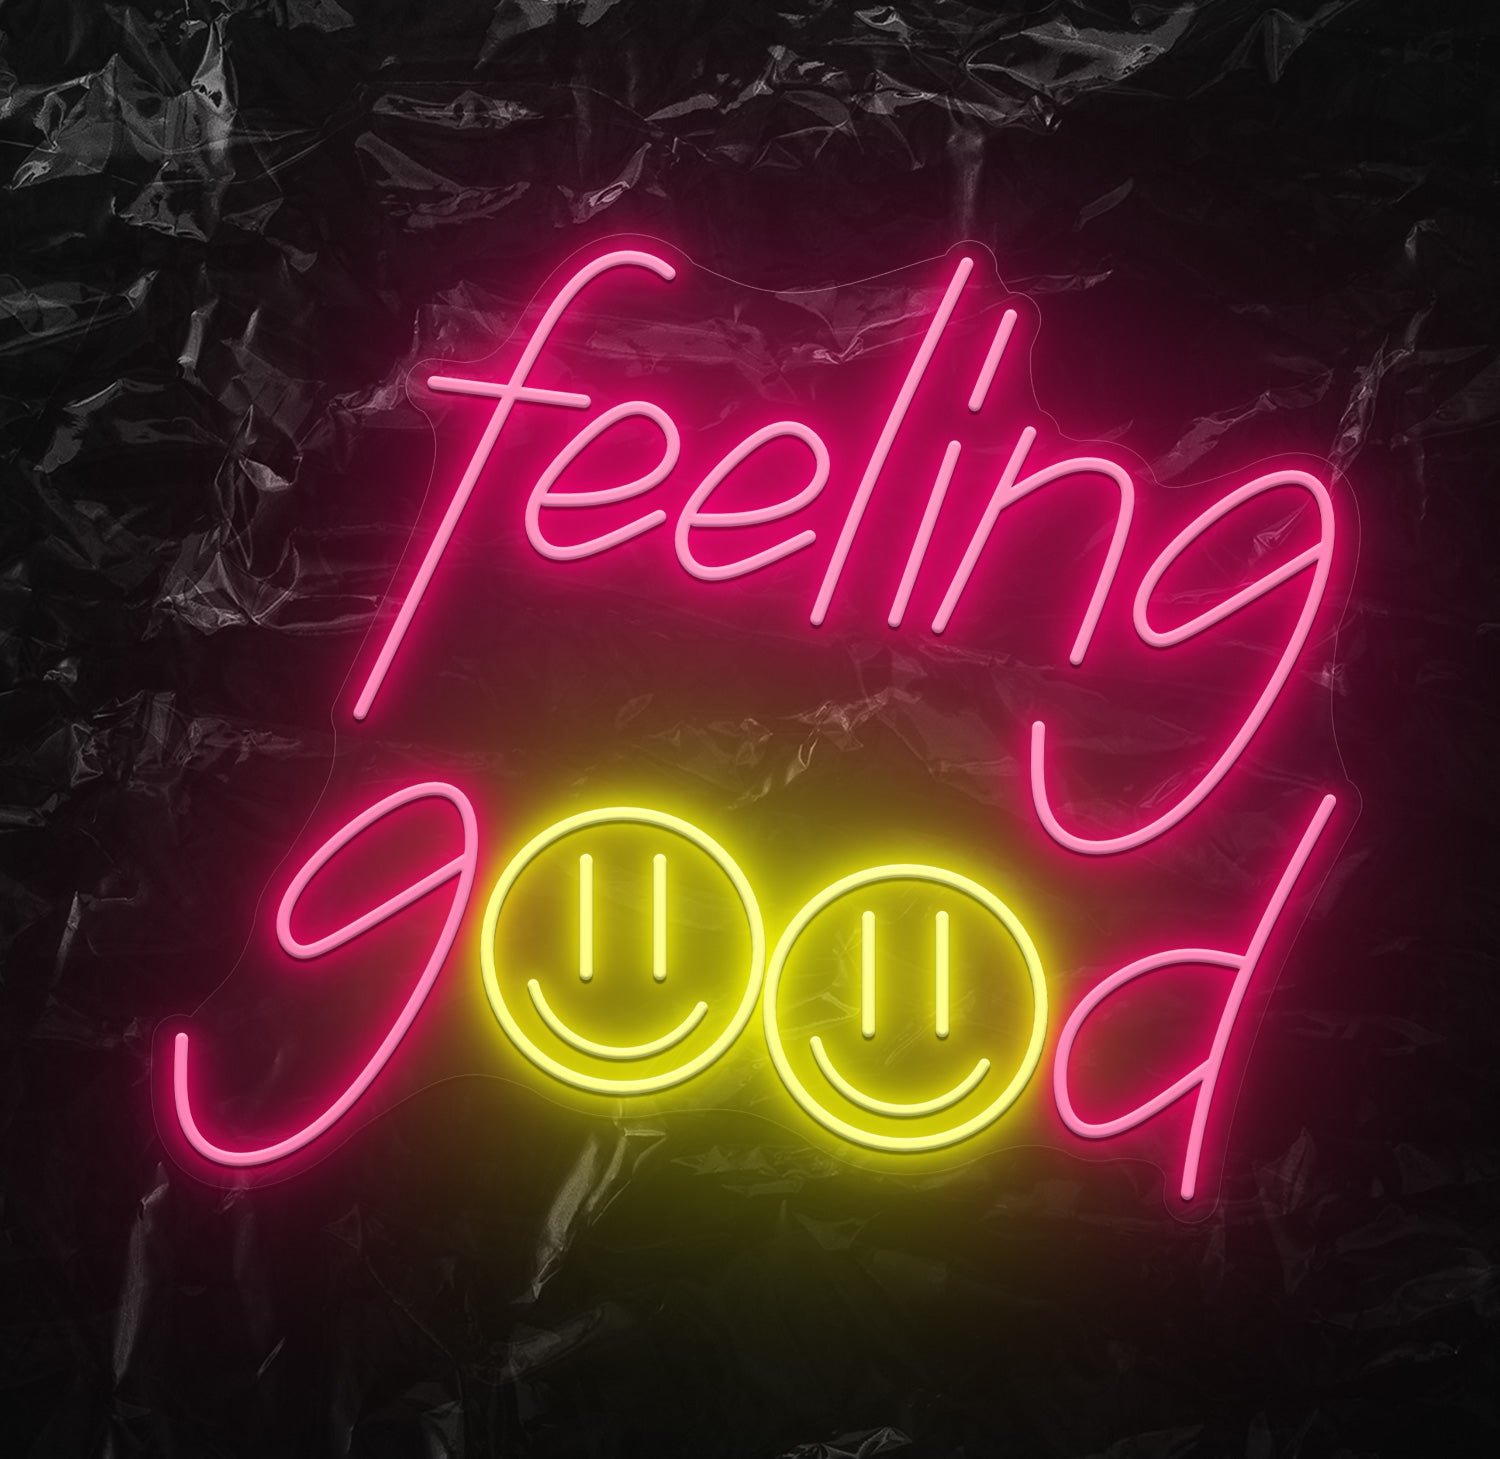 " Feeling Good" LED Neonschild - NEONEVERGLOW